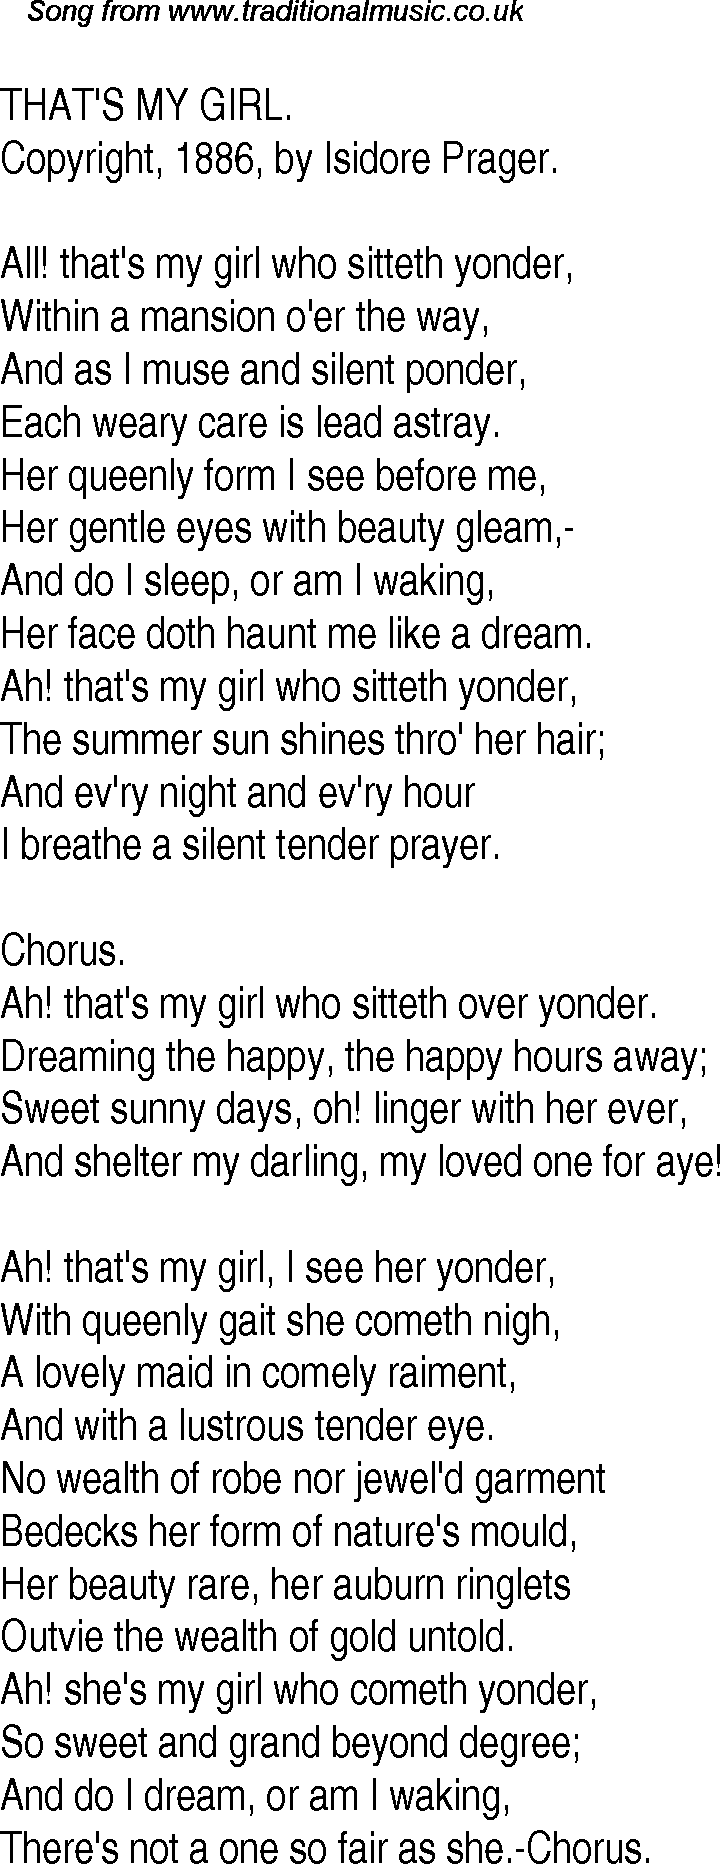 Girl with my lyrics song MY GIRL